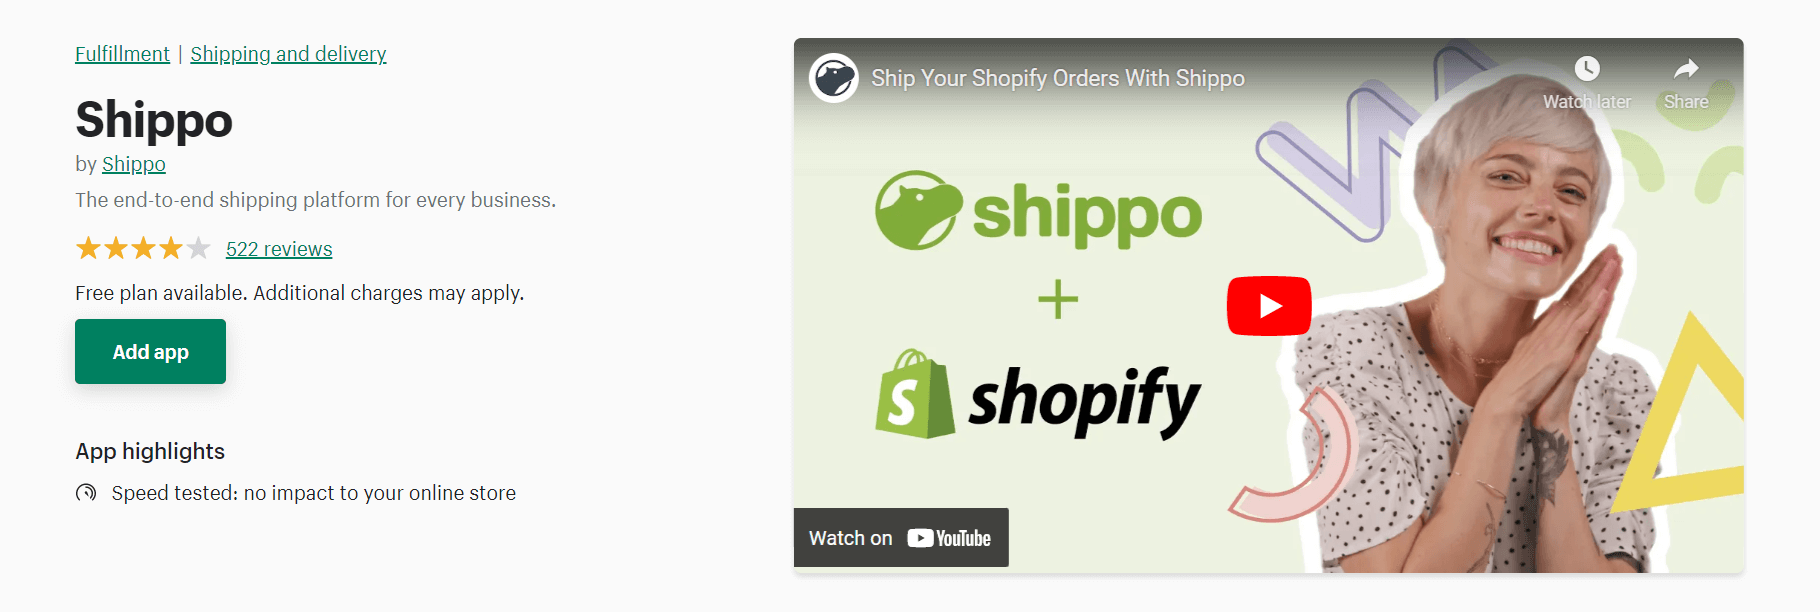 Shippo shopify app for shipping